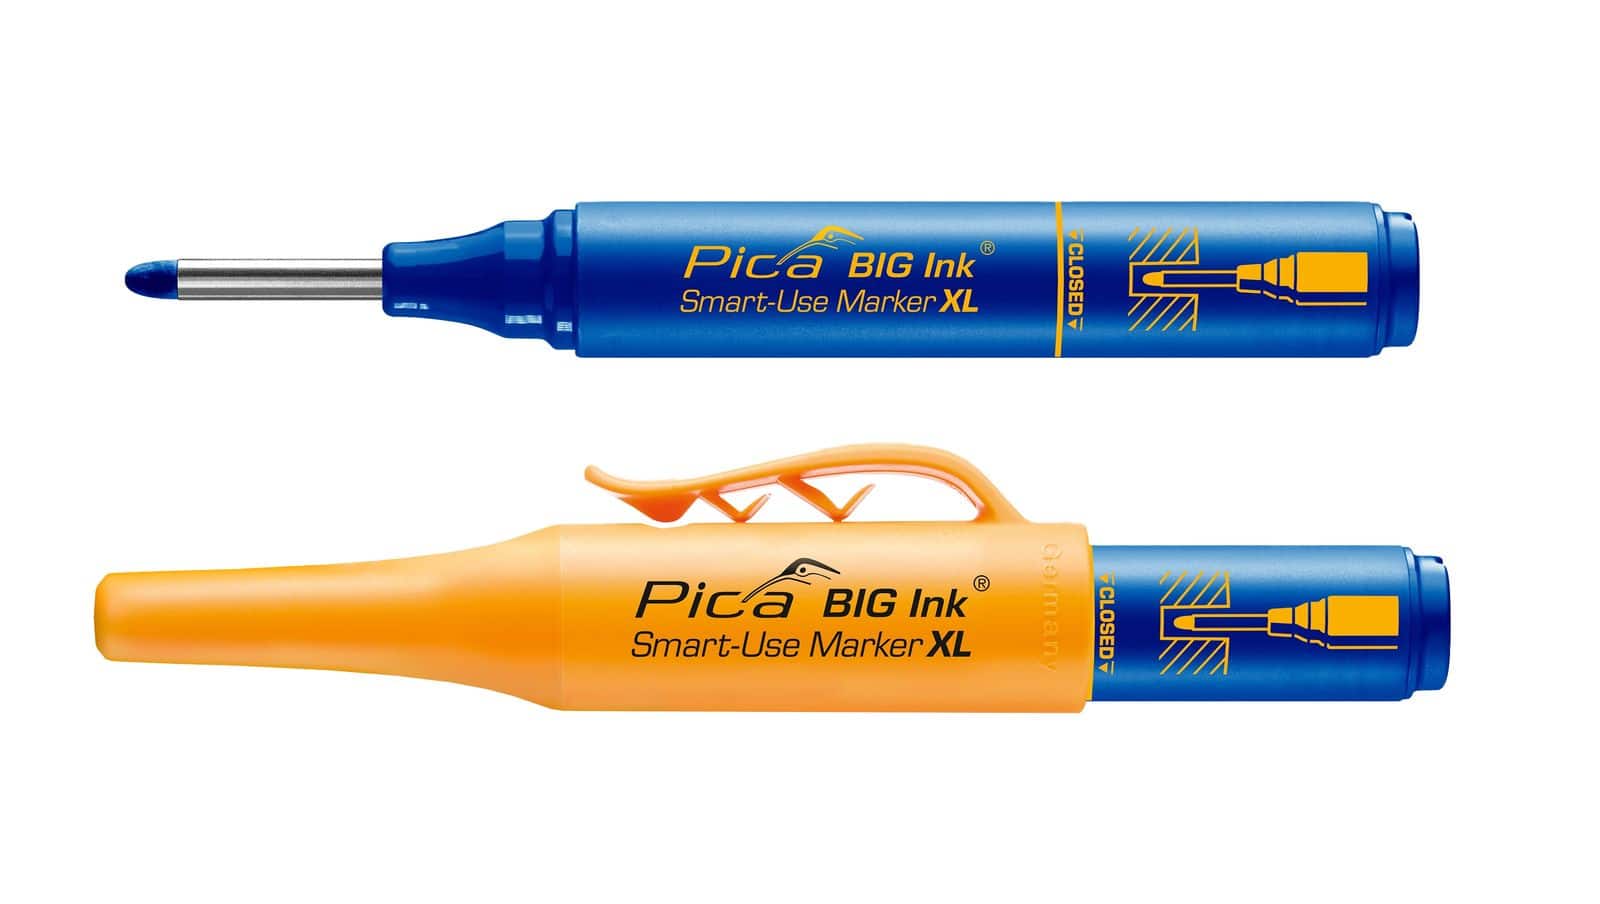 PICA BIG Ink Smart-Use Marker XL 170/41/SB, blau von Pica